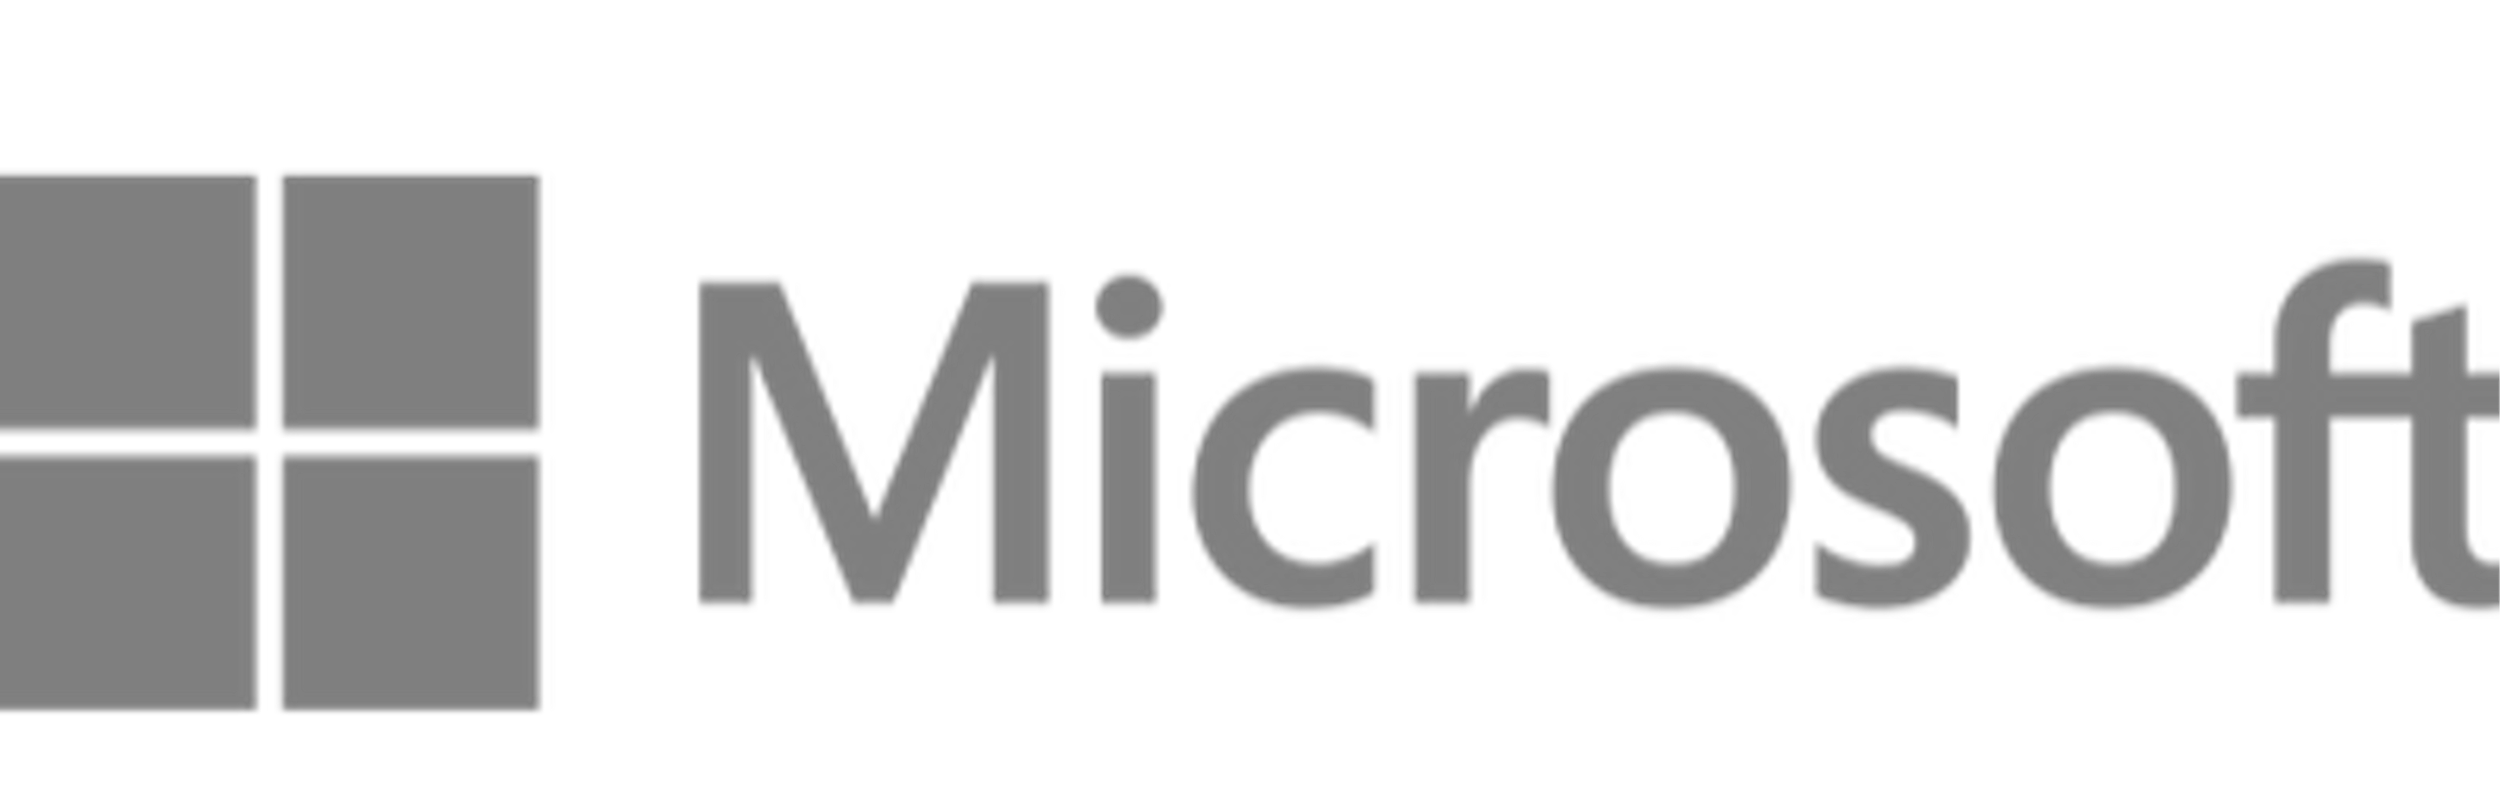 Microsoft Logo.png